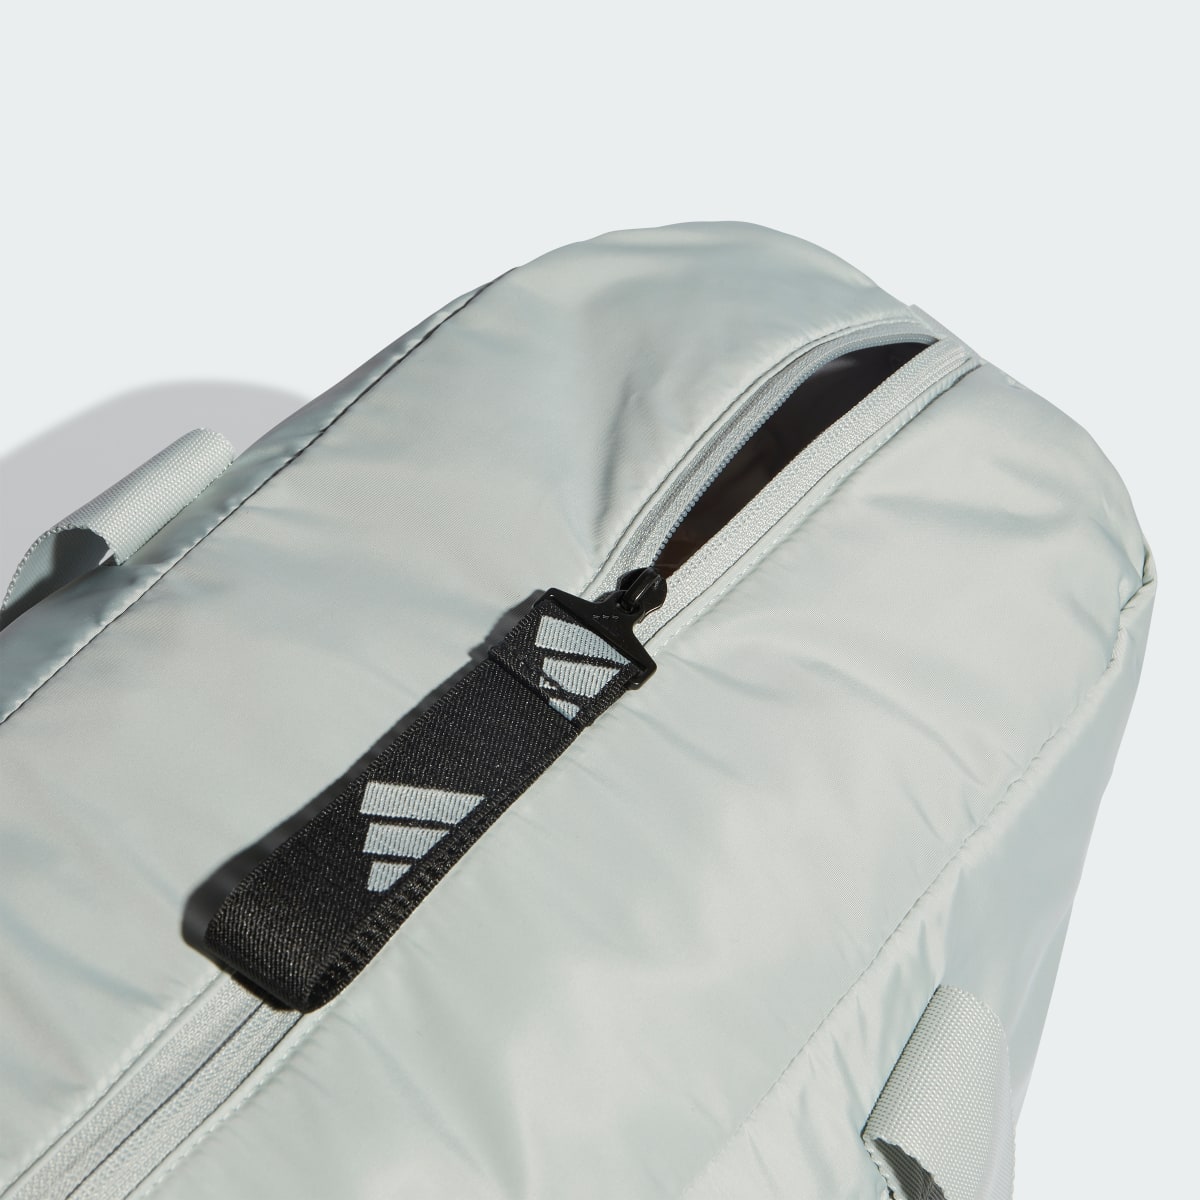 Adidas Sport Bag. 7